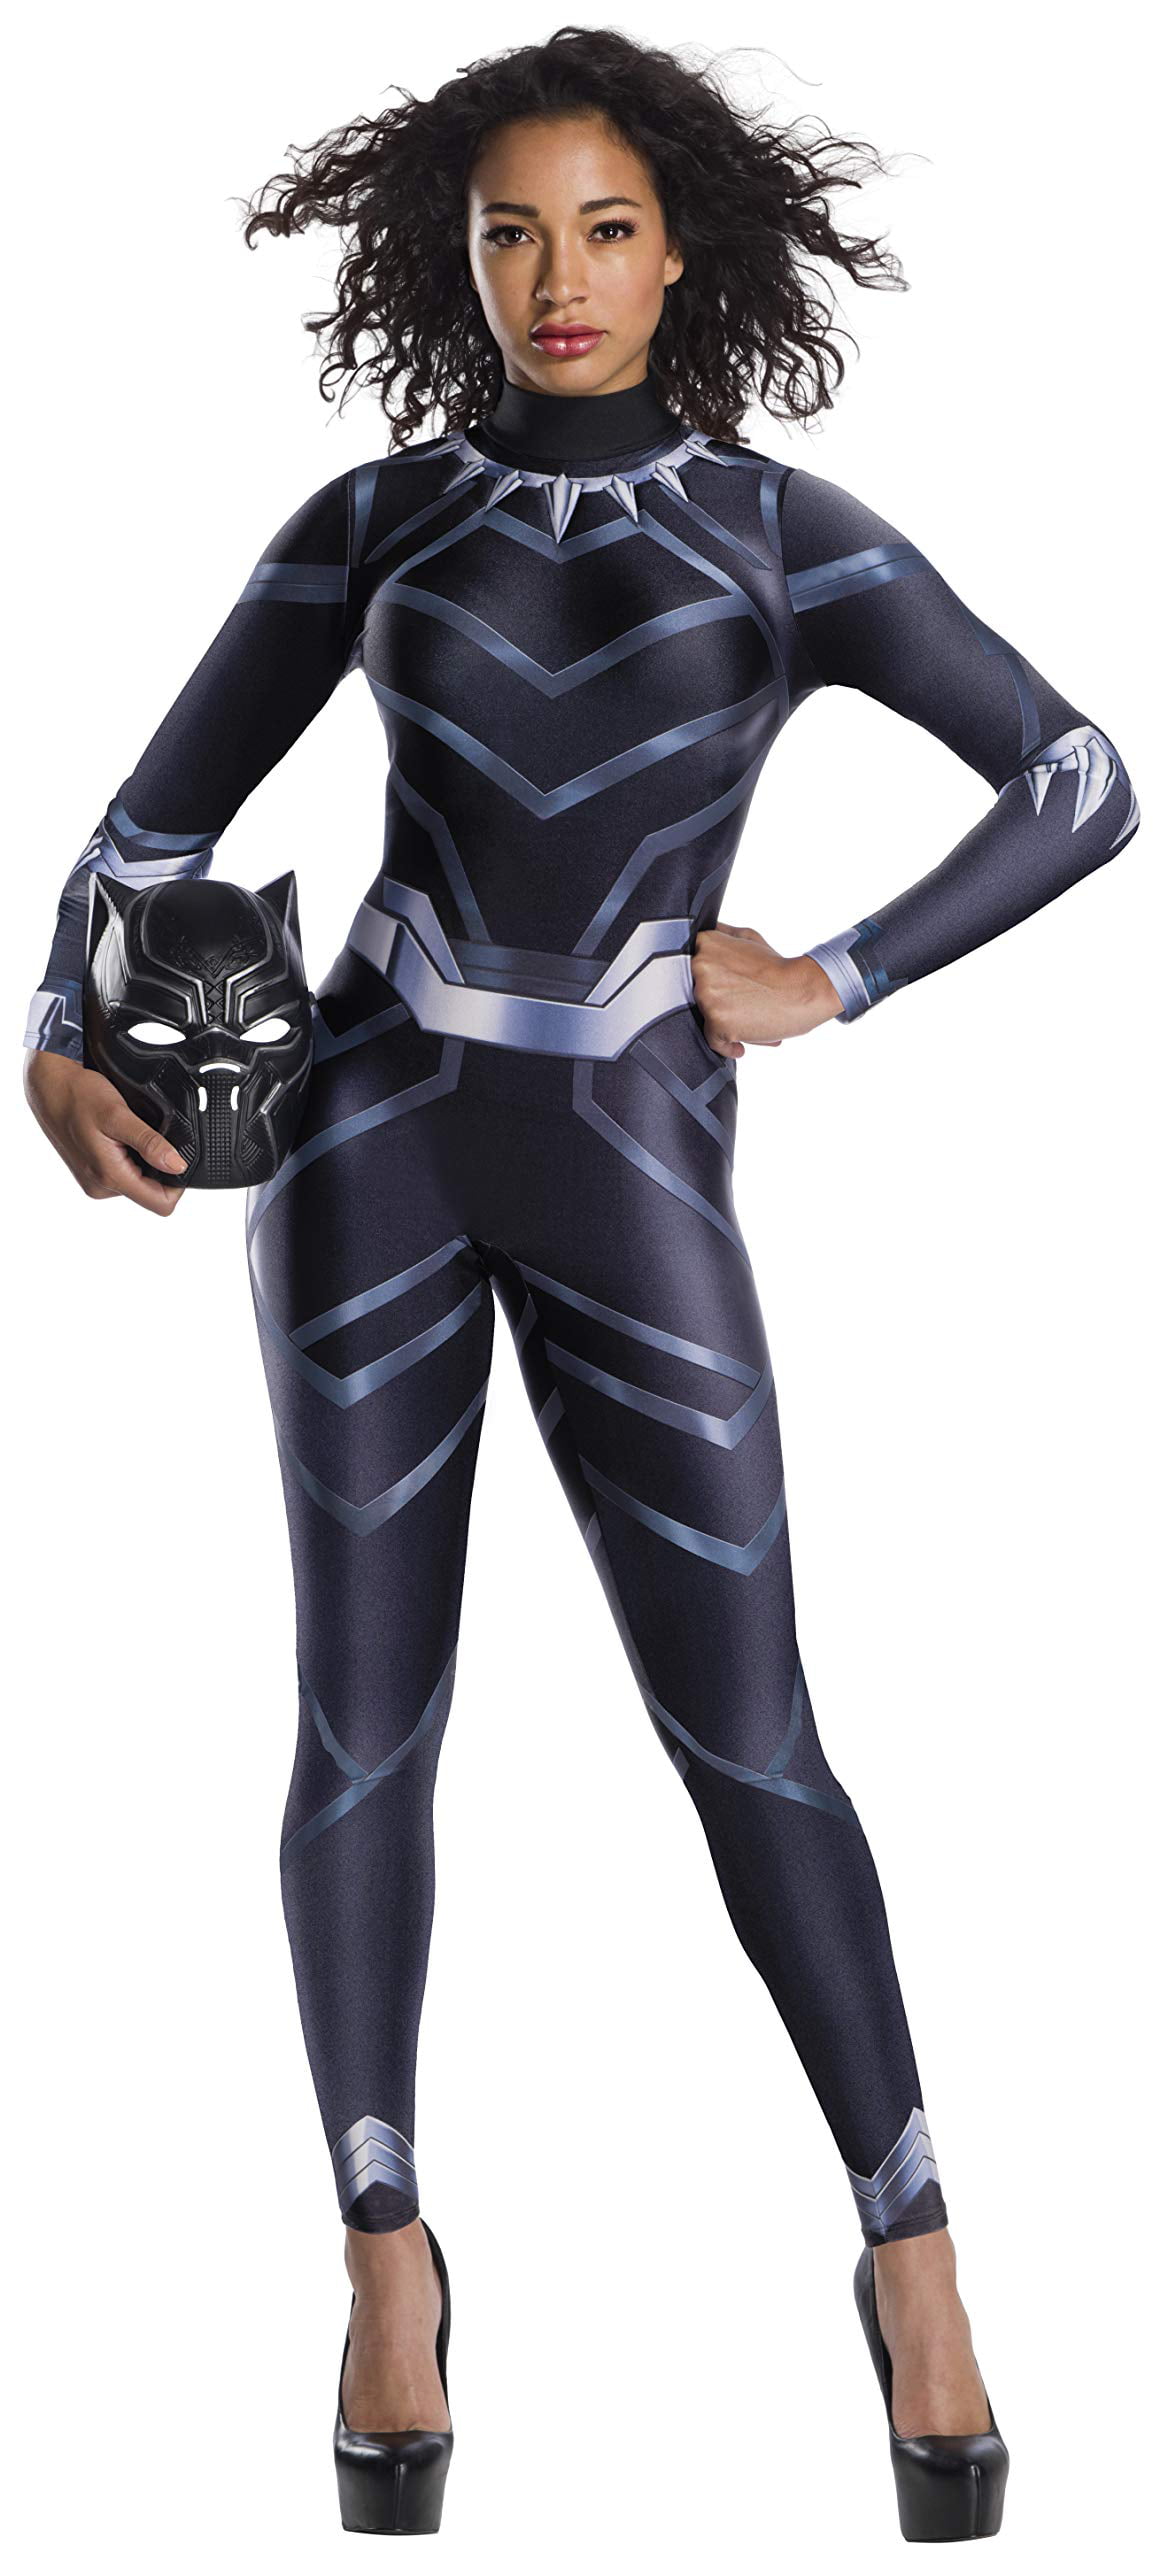 Black Panther Costume Girls Black Panther Outfit Disney Movie Black Panther  Kids Halloween Costume Black Panther 